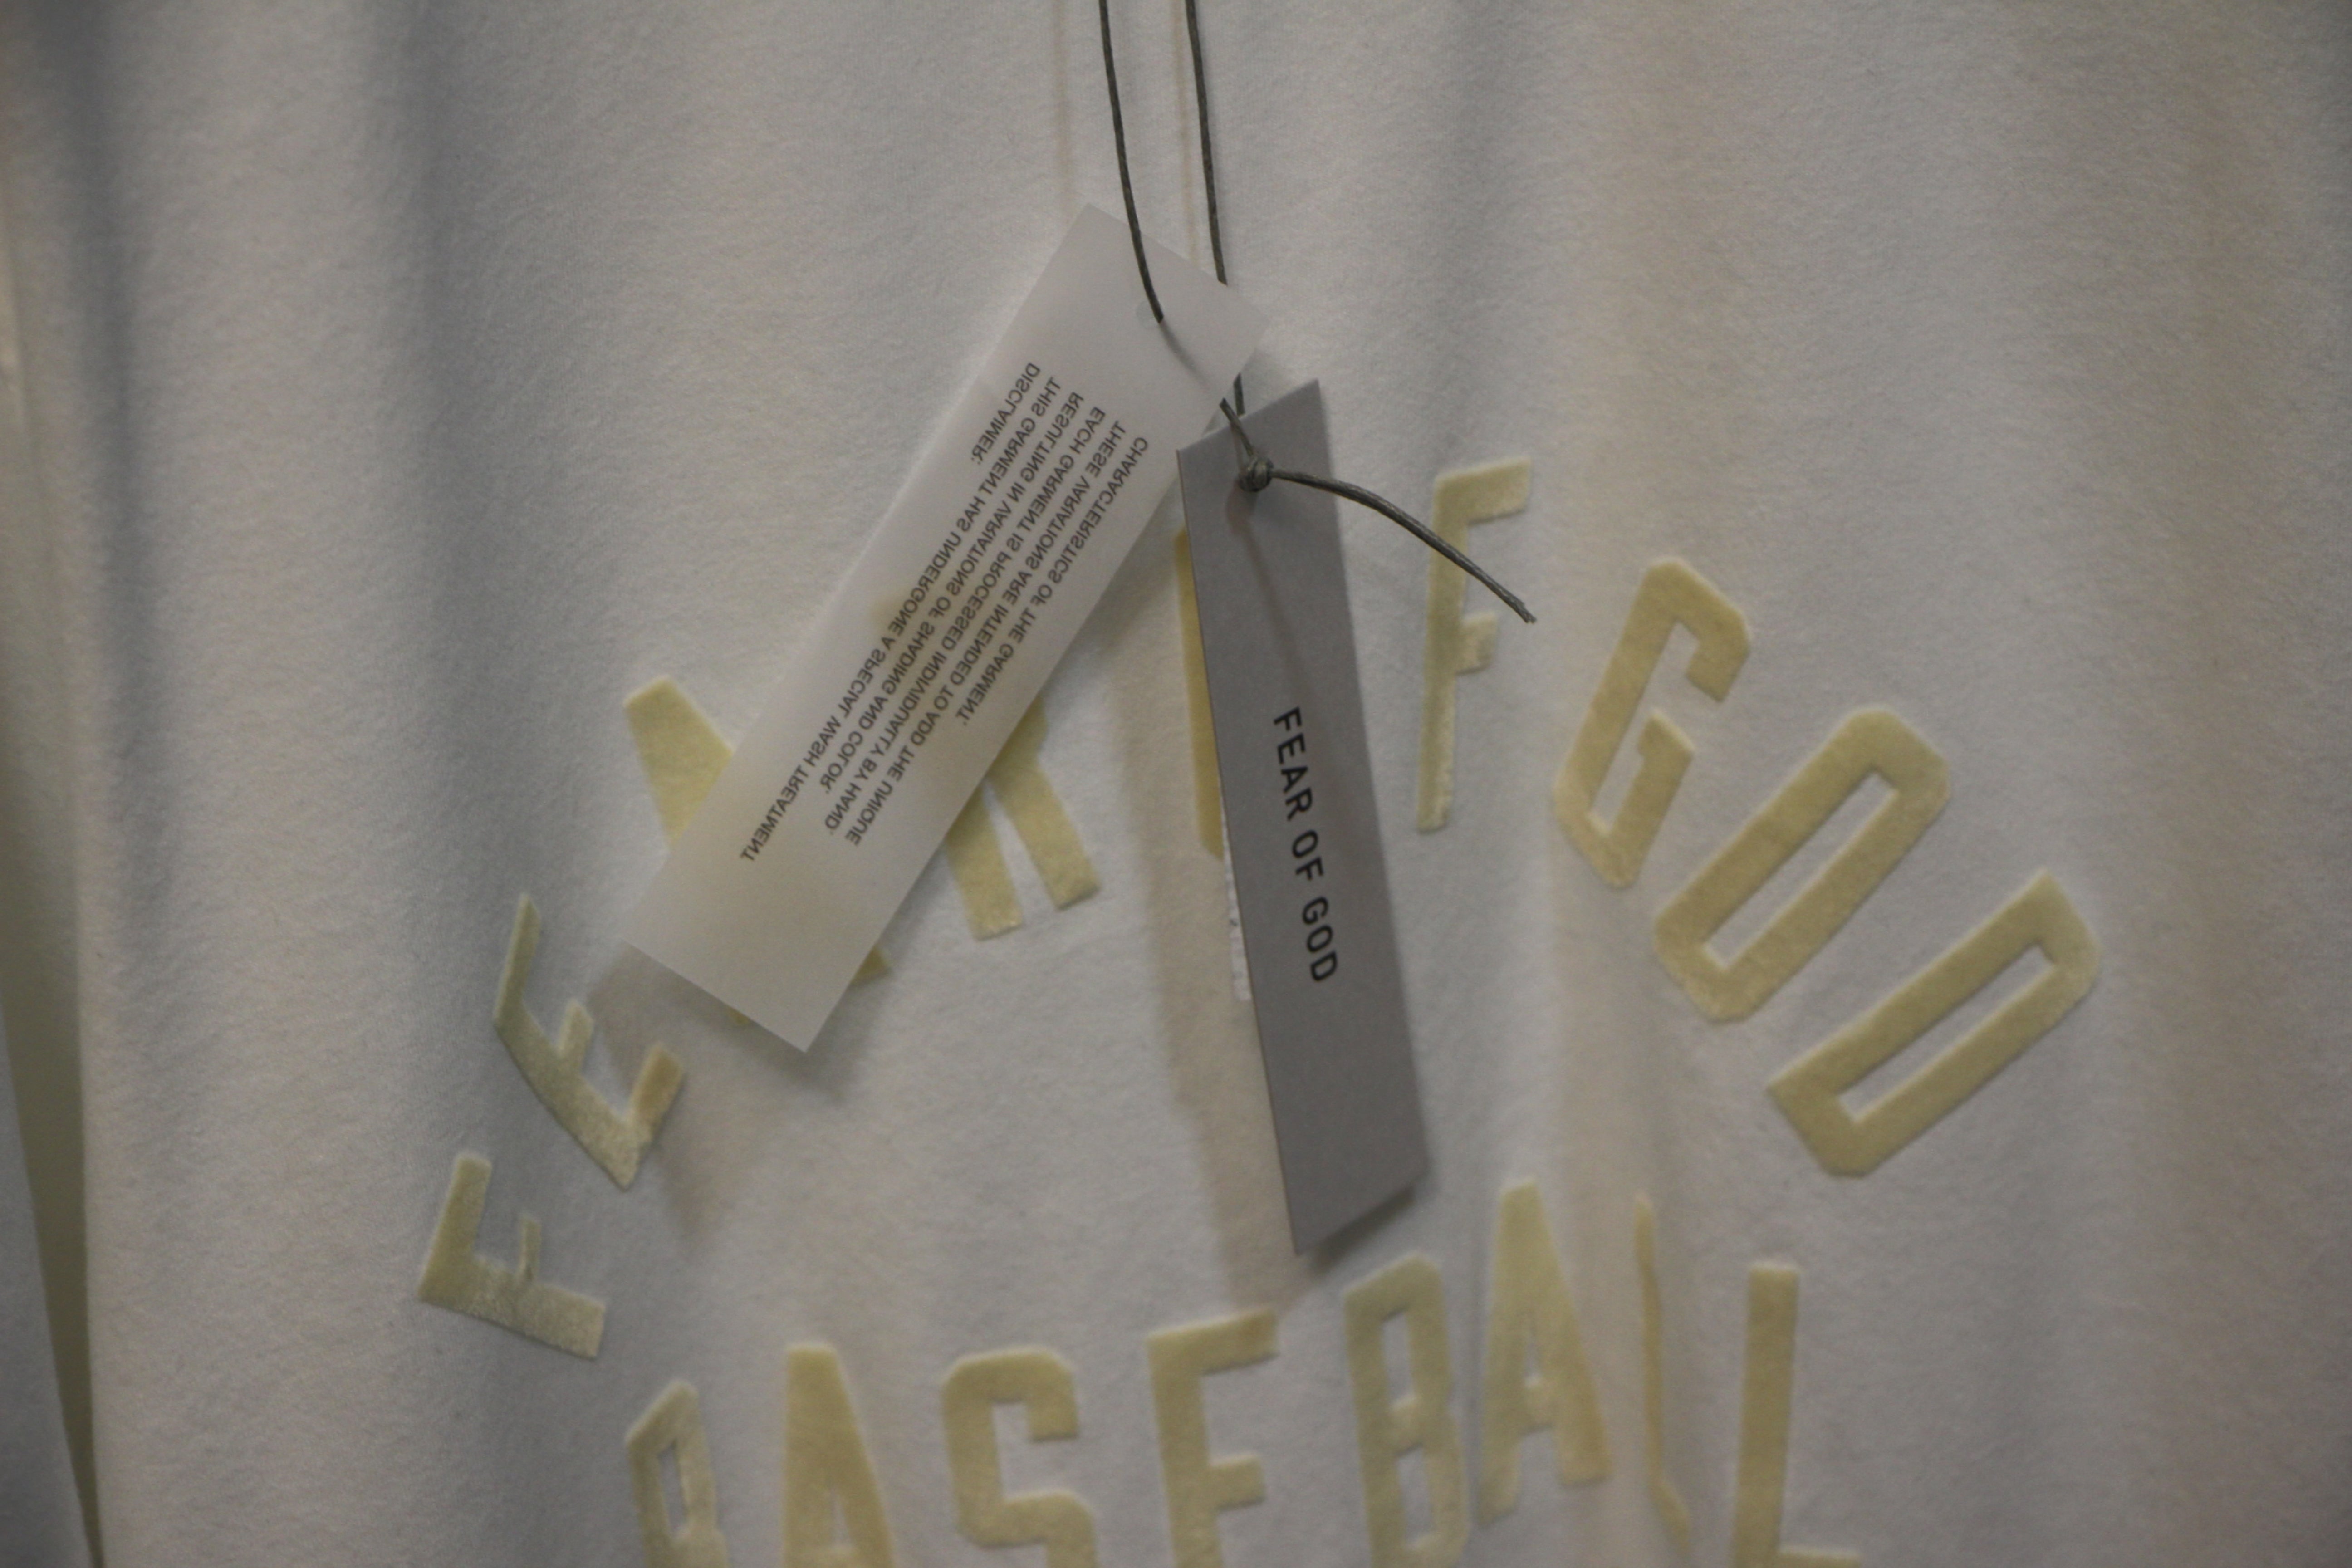 Fear of God "Baseball" Logo T-Shirt